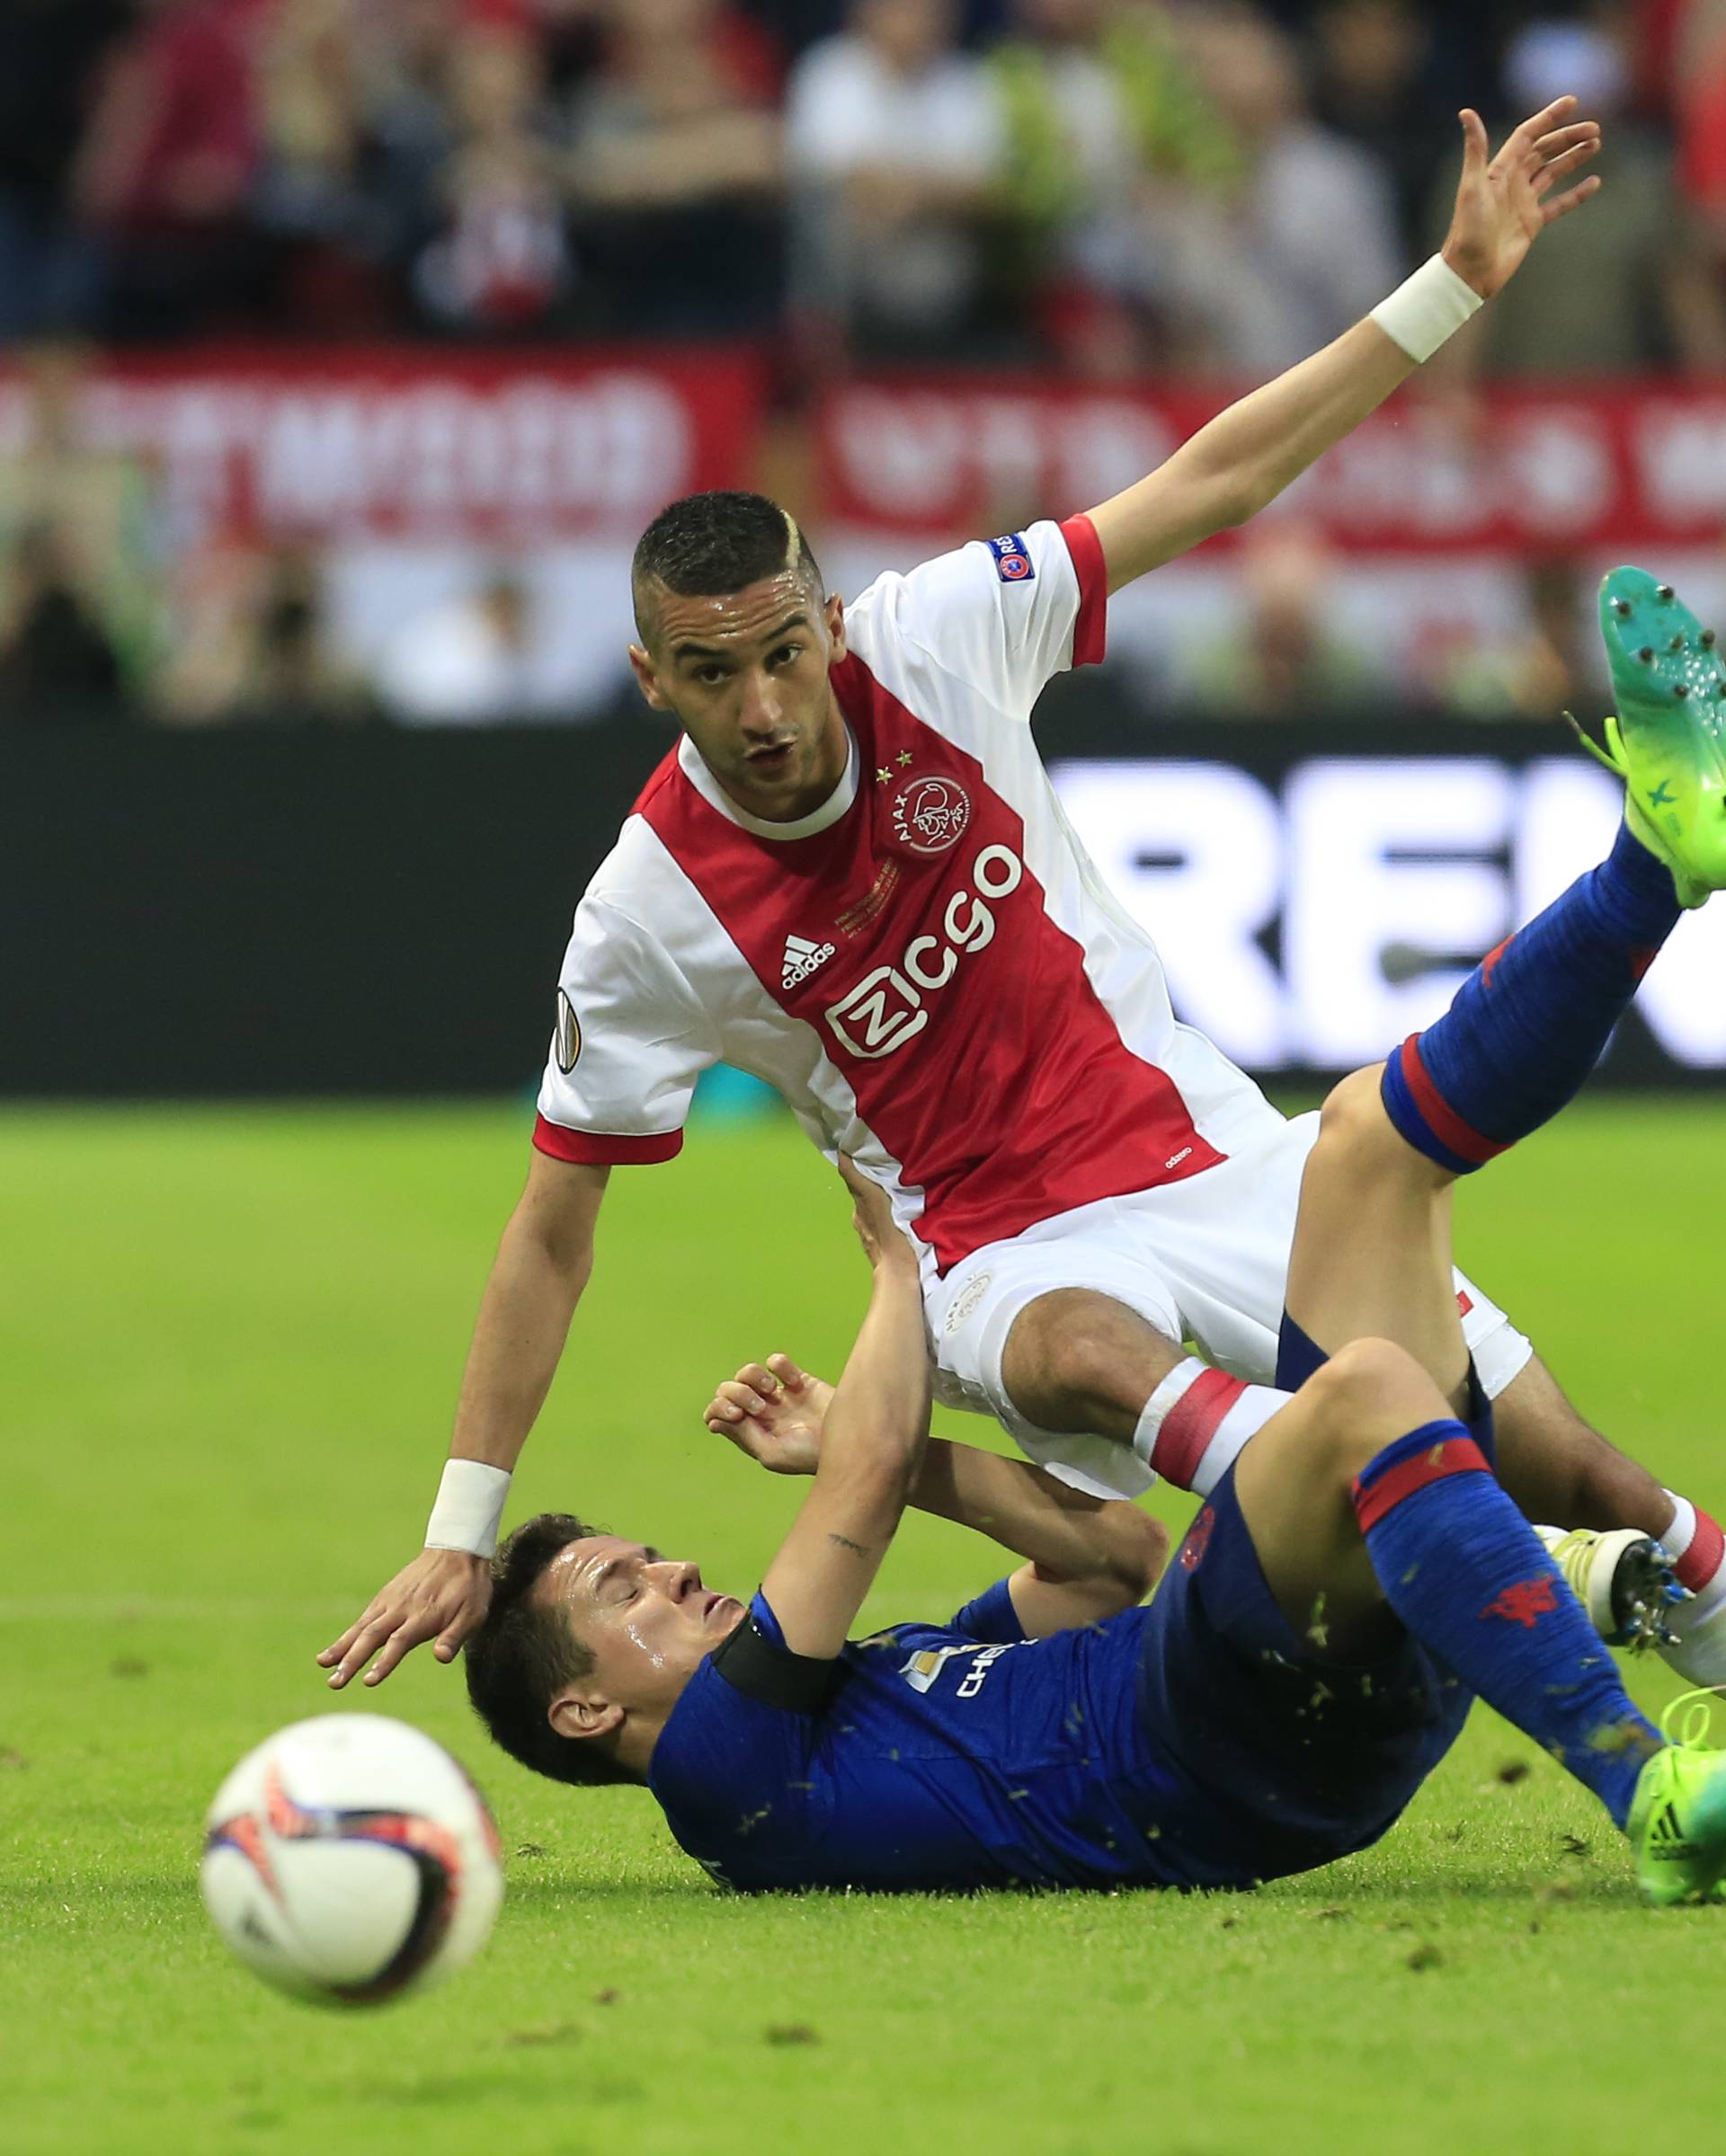 Ajax's Hakim Ziyech in action with Manchester United's Ander Herrera